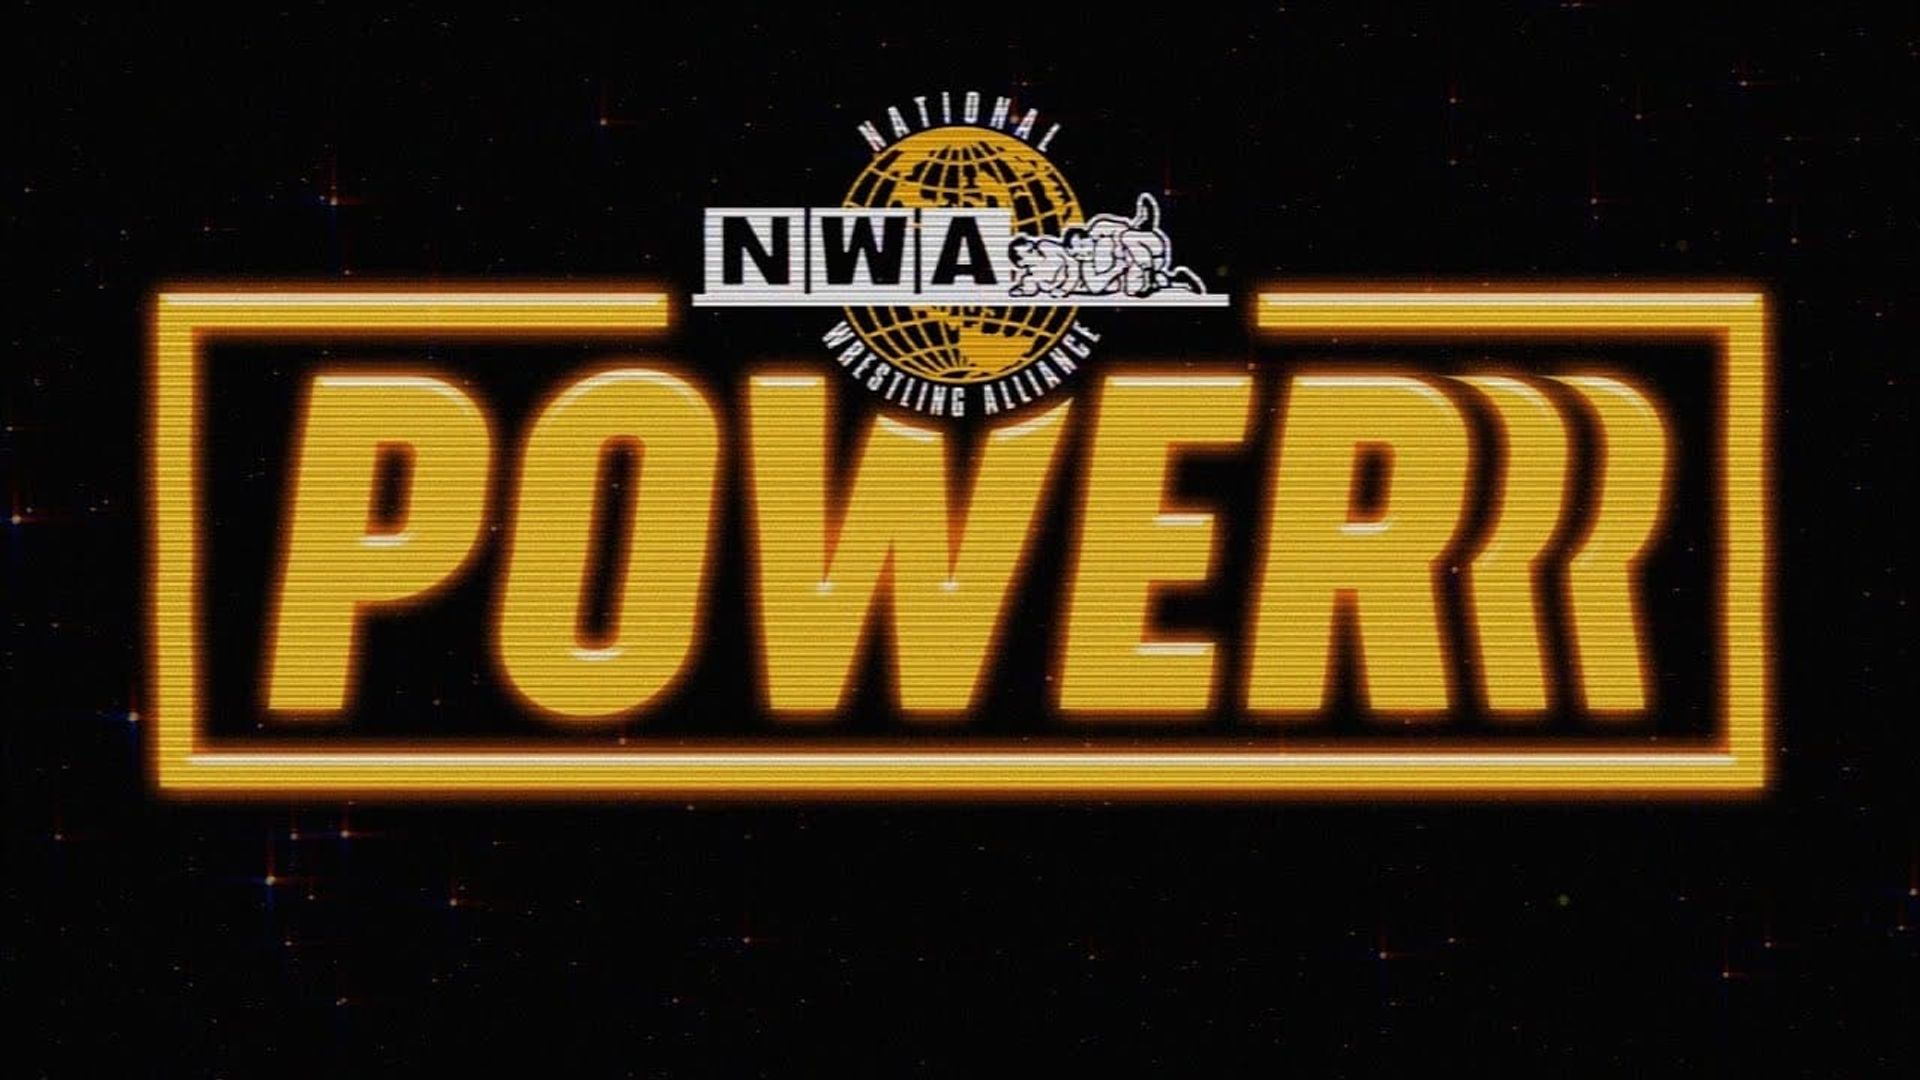 NWA Powerrr background